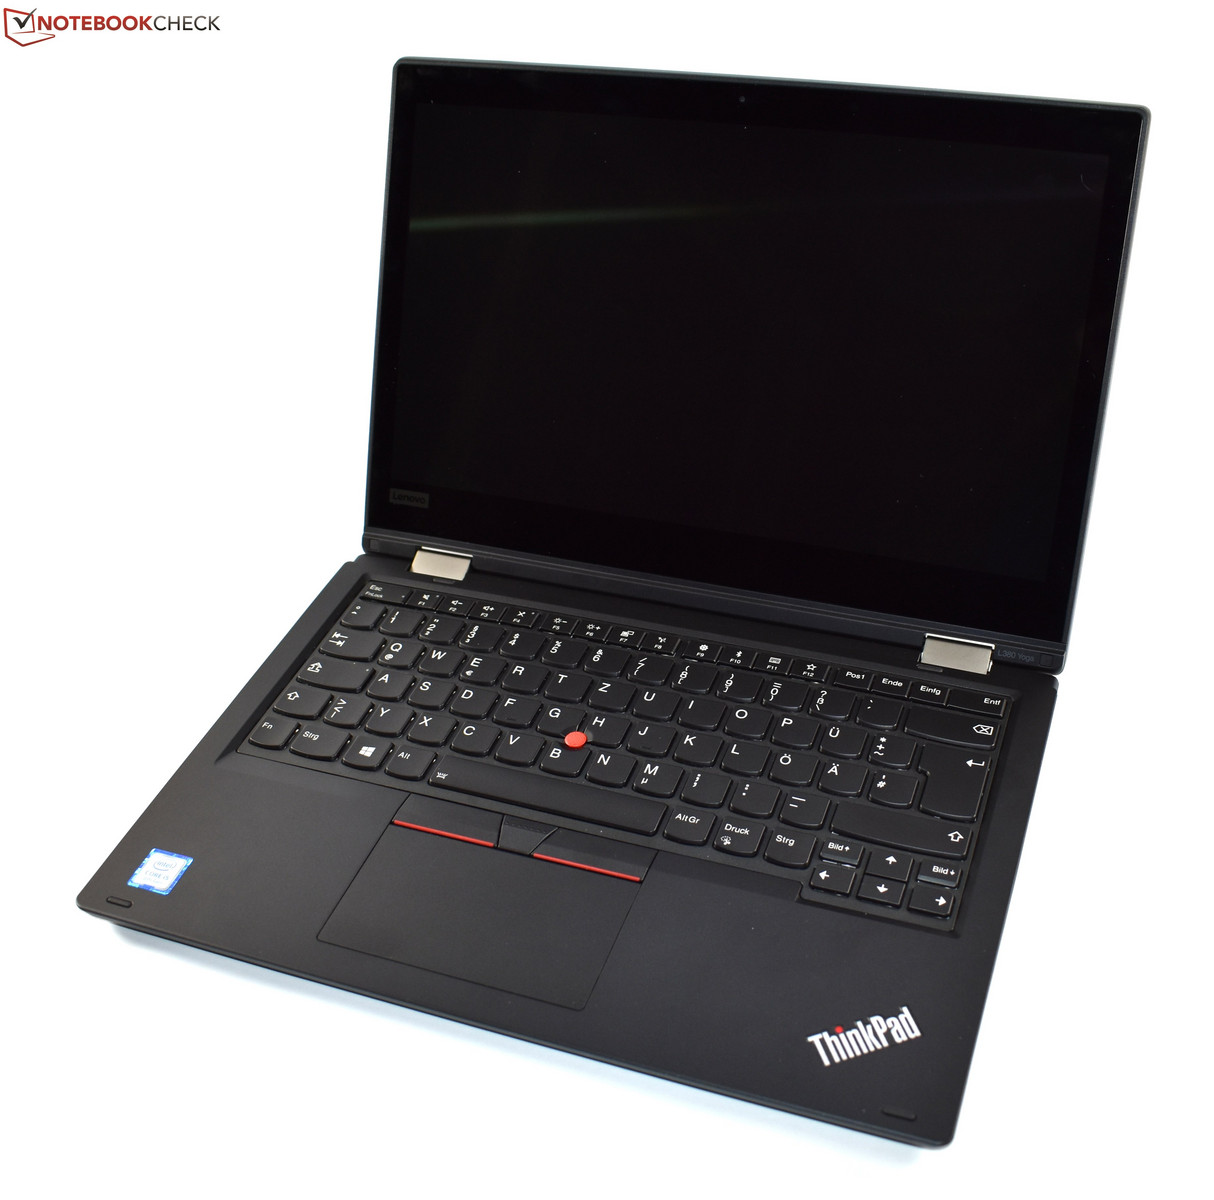 Lenovo ThinkPad L380 Yoga (i5-8250U, FHD) Convertible Review